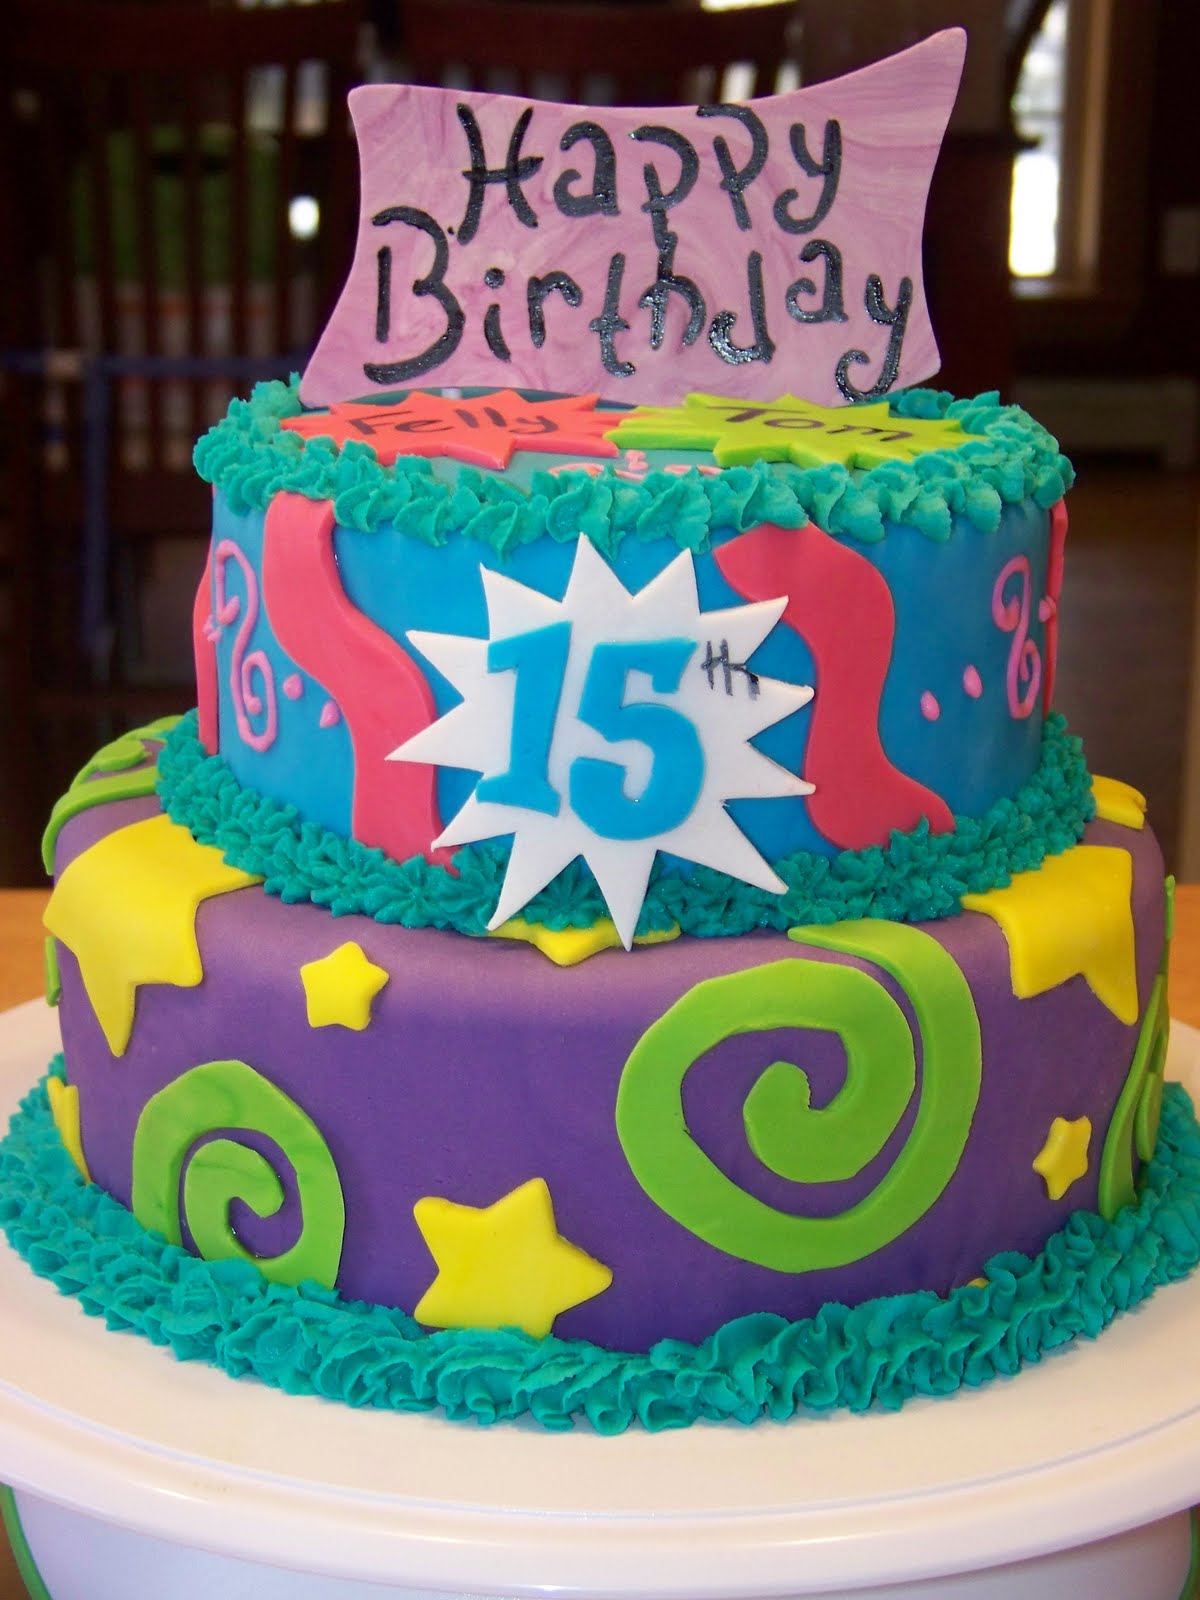 Nina's Cake Design: Happy 15 th Birthday!